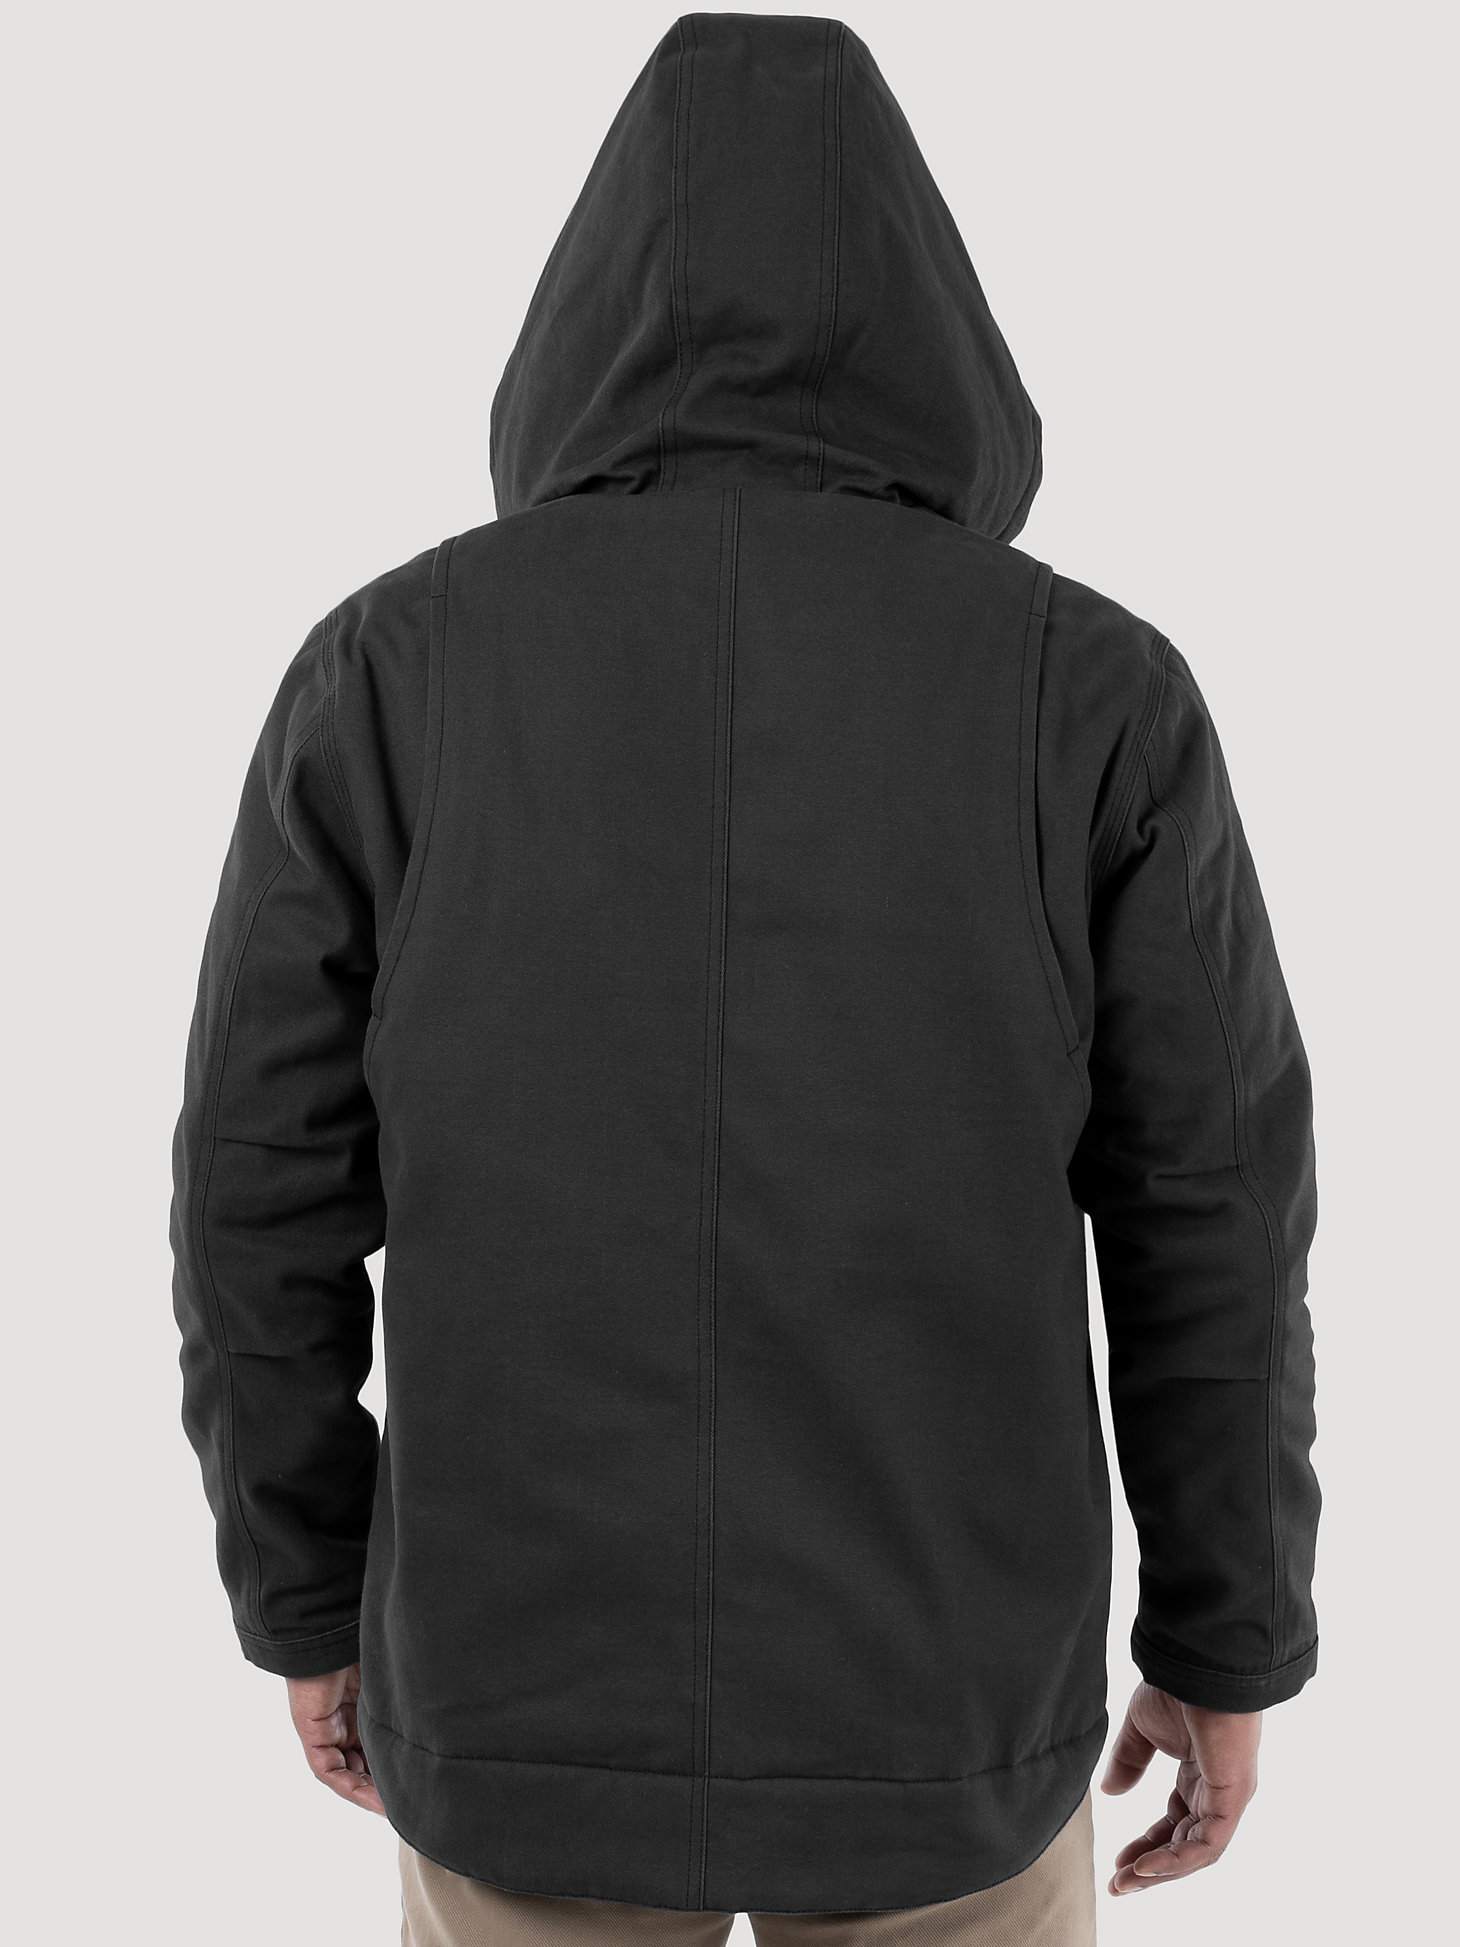 Wrangler® Workwear Sherpa Lined Shirt Jacket in Black alternative view 1